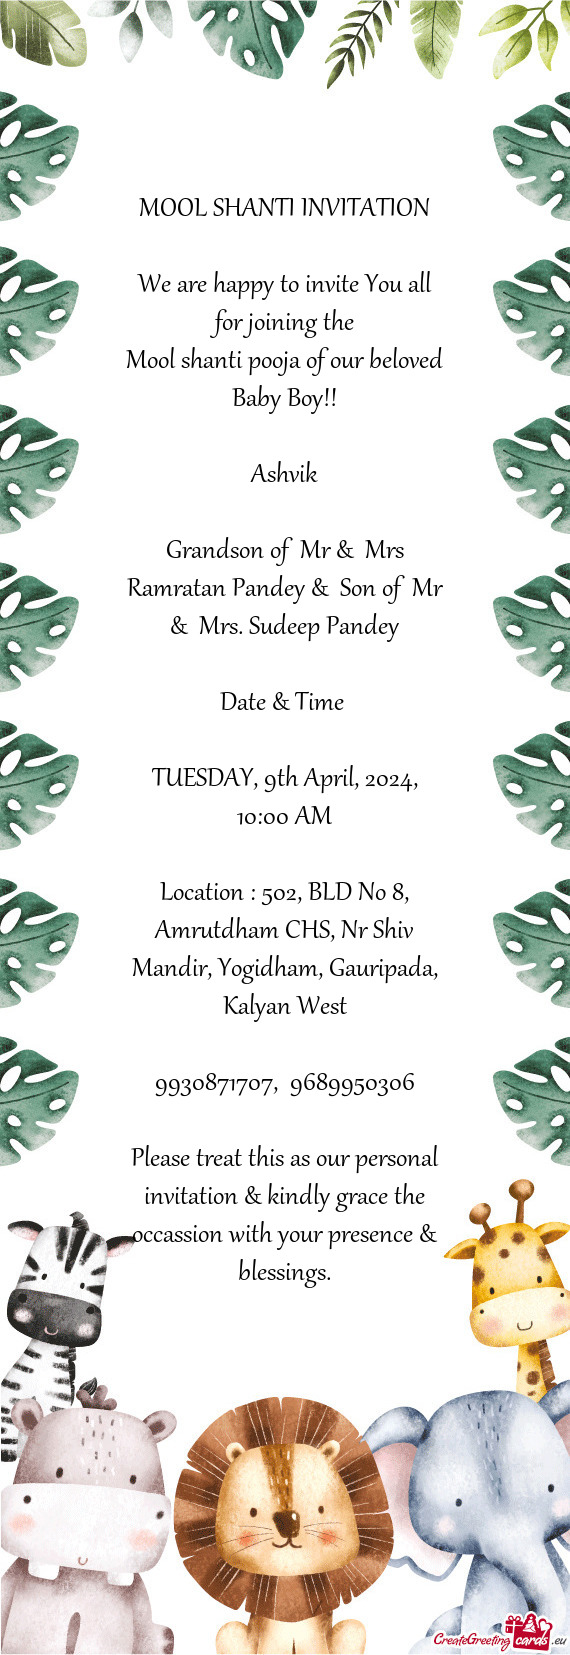 Grandson of Mr & Mrs Ramratan Pandey & Son of Mr & Mrs. Sudeep Pandey